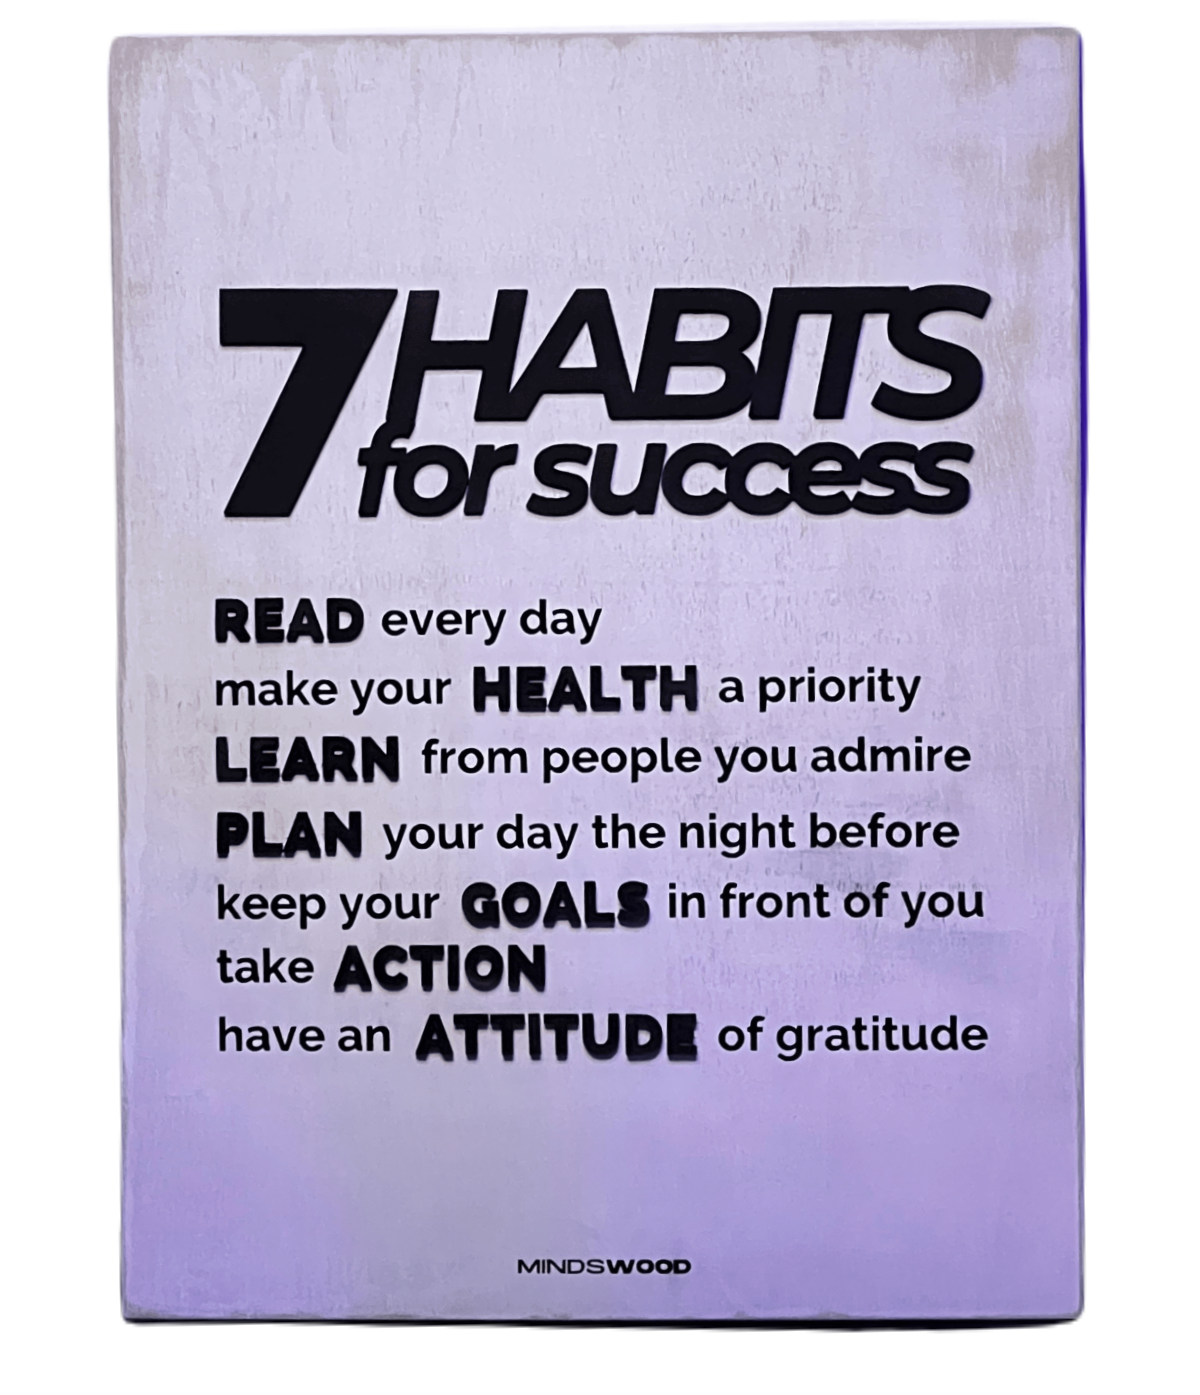 7 Habits for succes